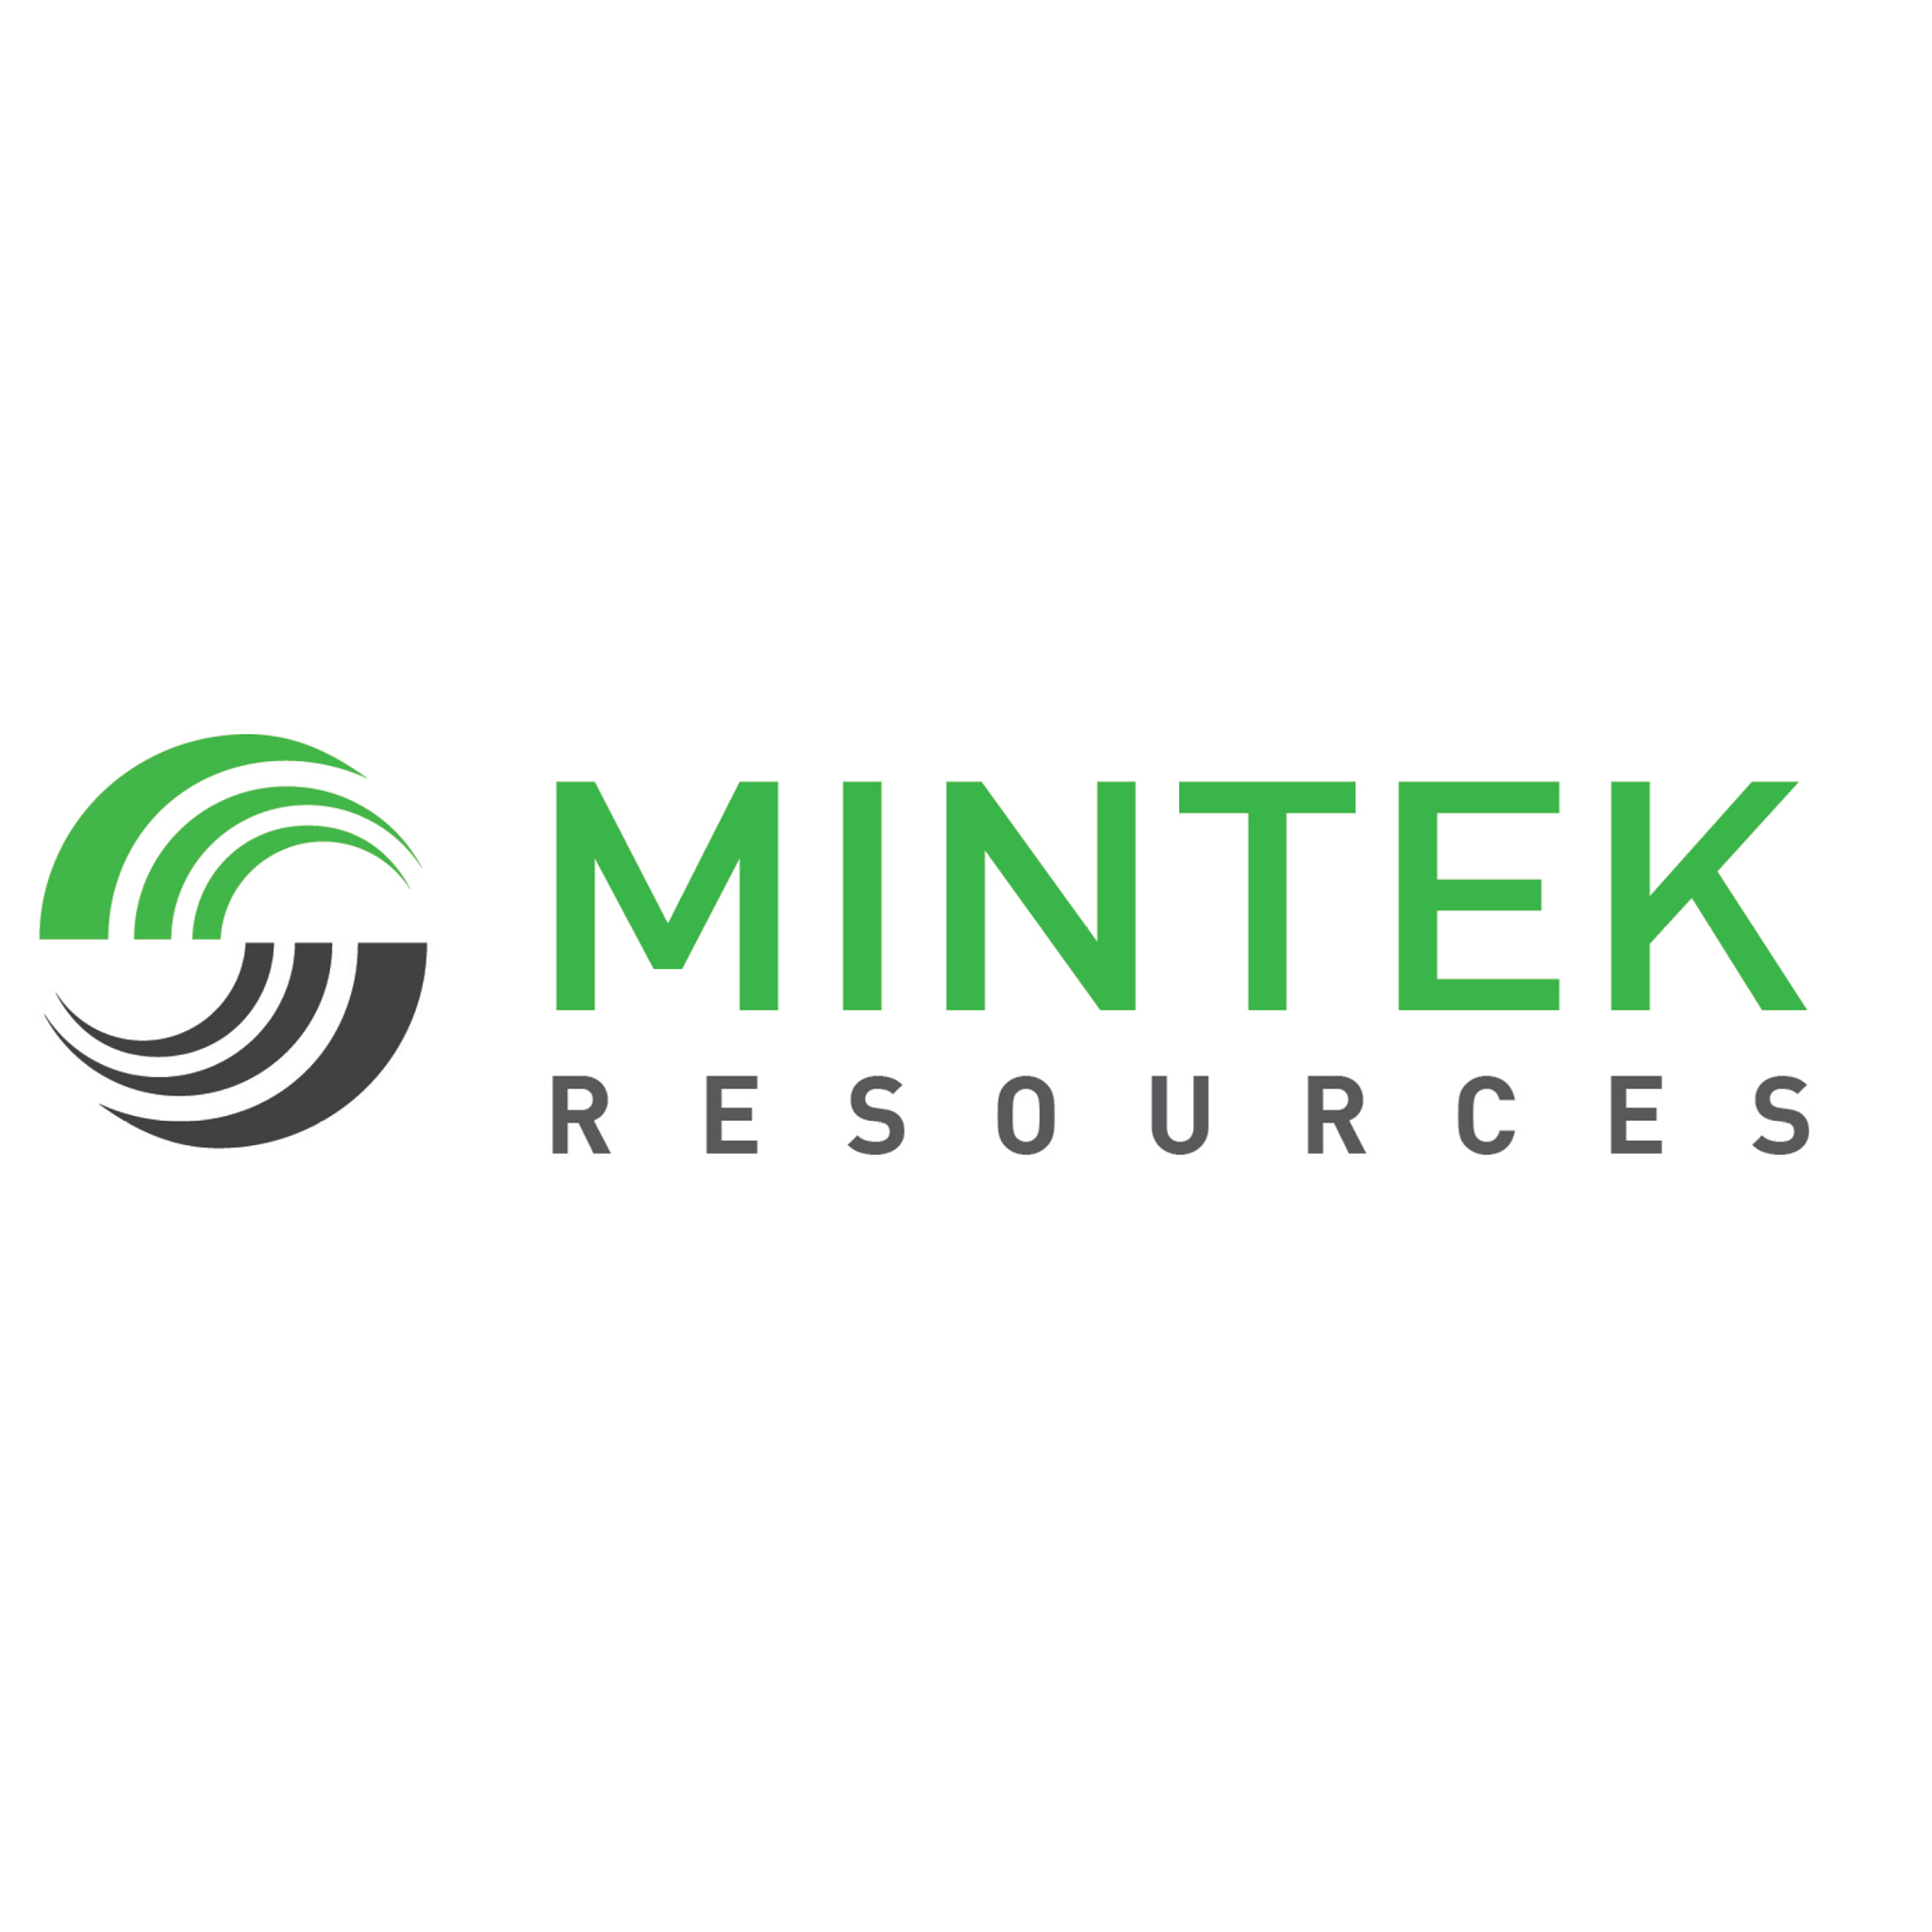 Mintek Resources